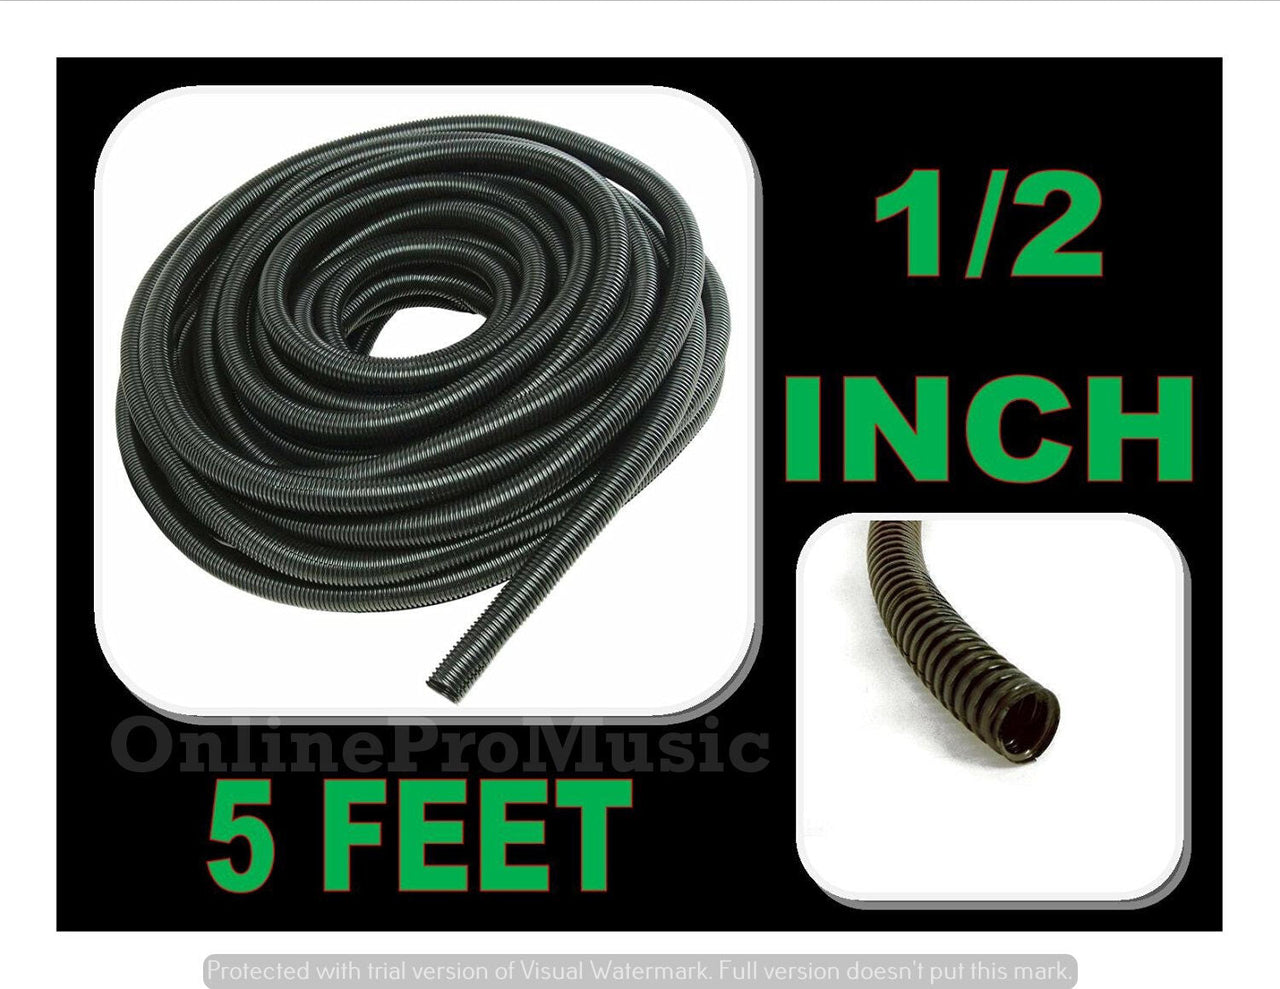 5 FT 1/2" INCH Split Loom Tubing Wire Conduit Hose Cover Auto Home Marine Black